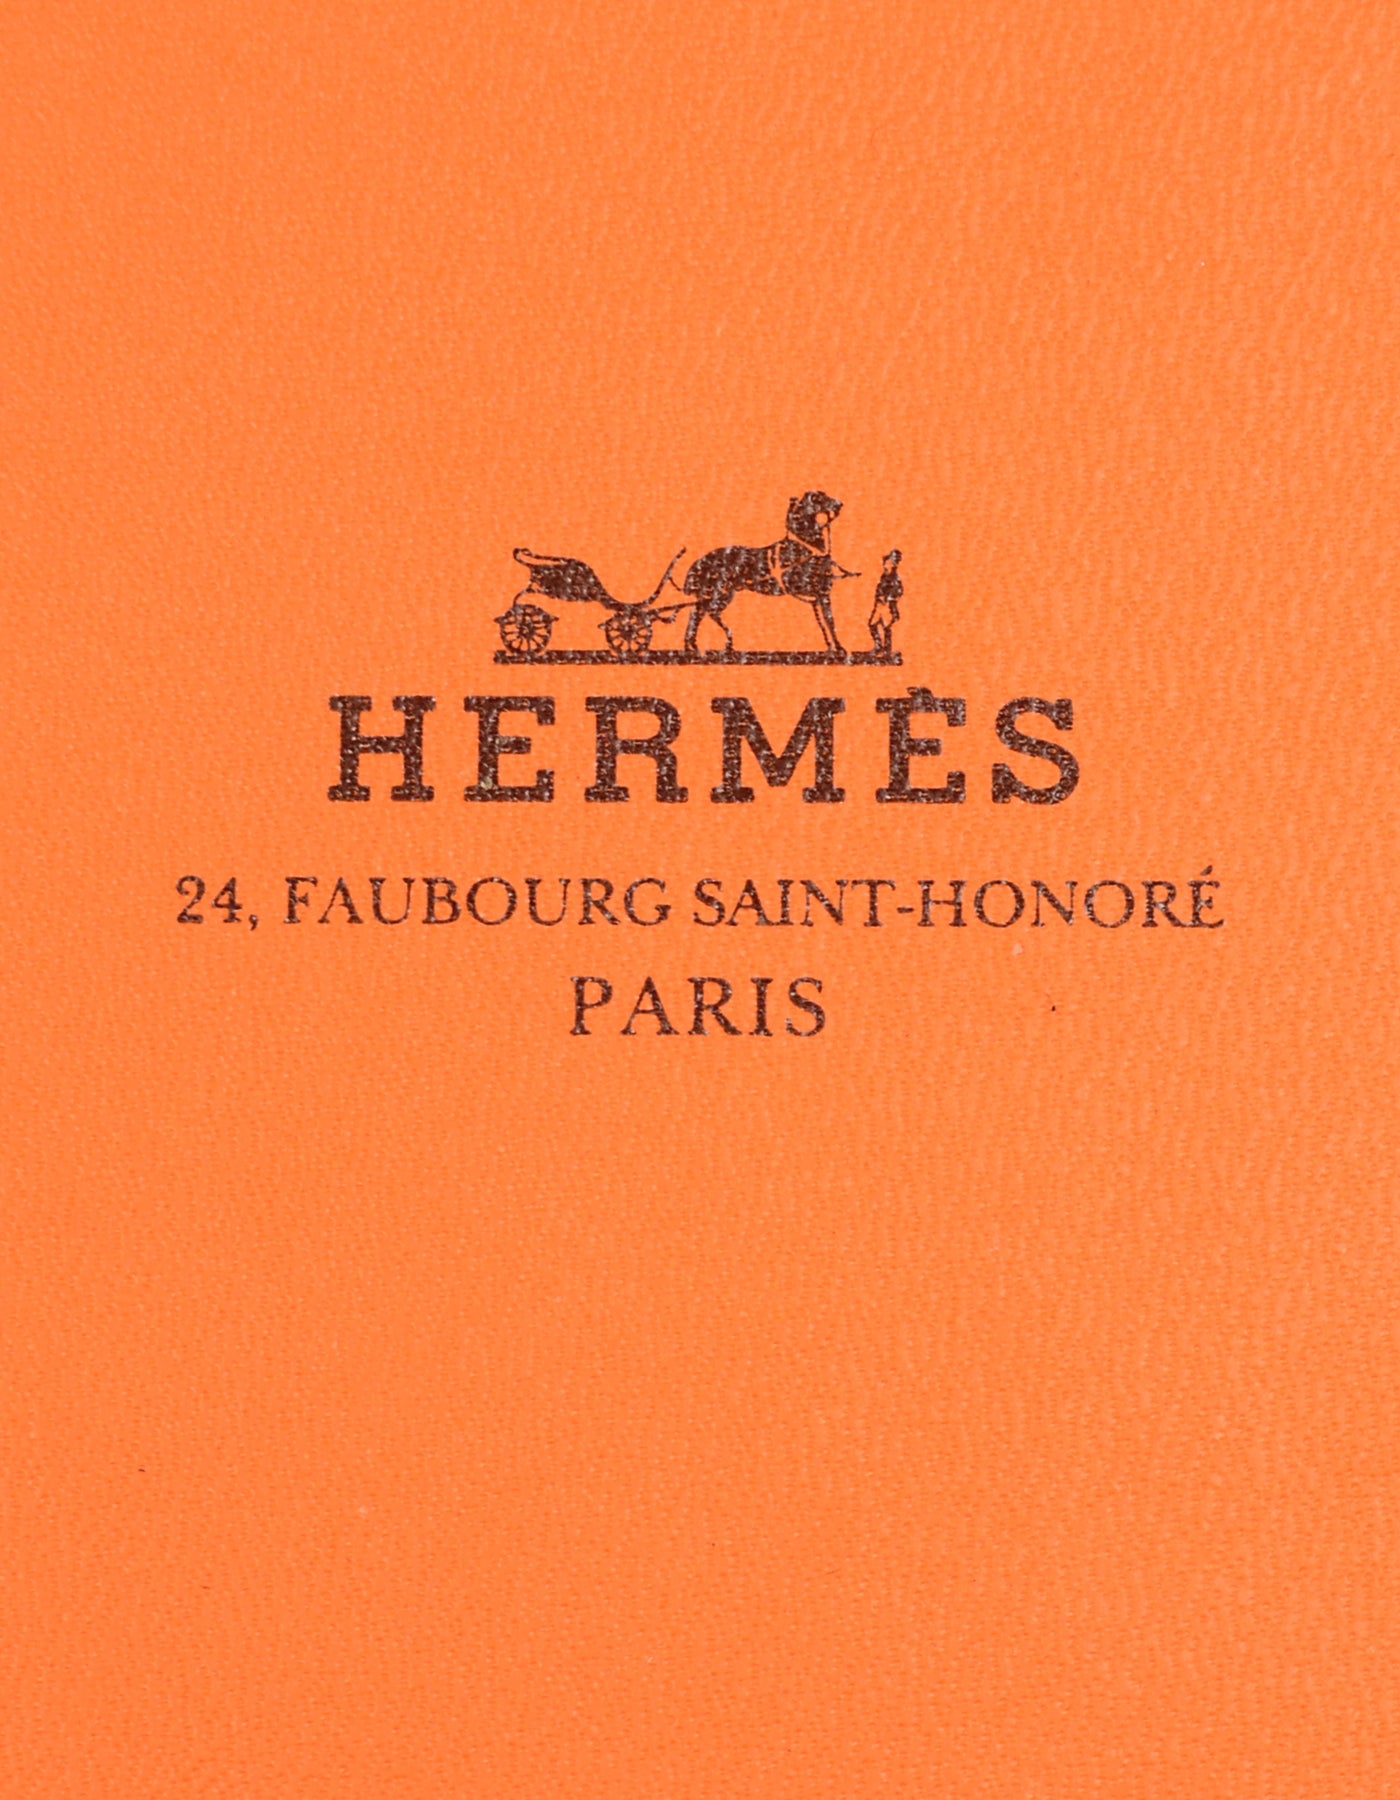 Hermes Orange Tie/Scarf Boxes W/ Ribbons 15 H x 5 W x .75 D